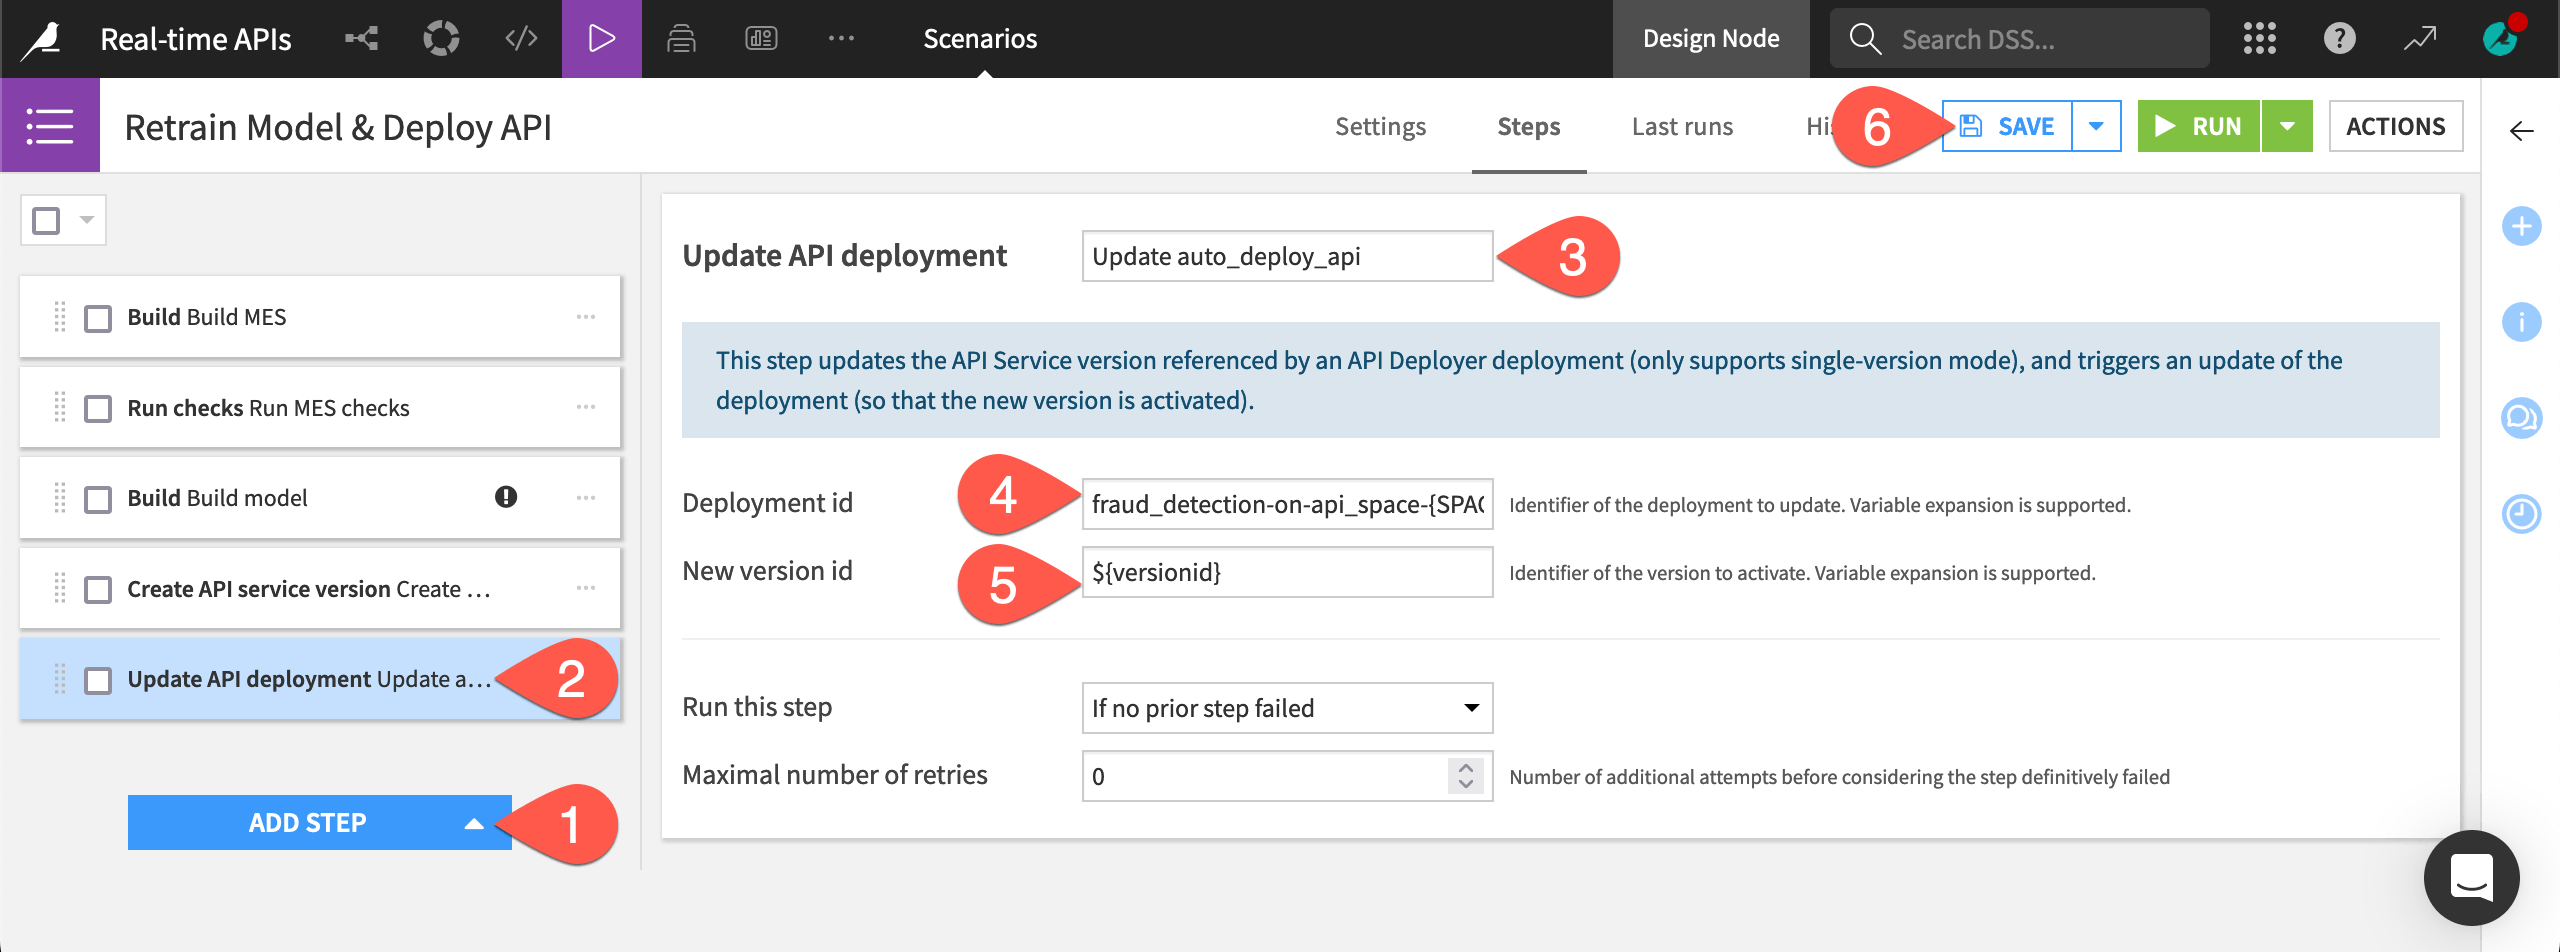 Dataiku screenshot of a scenario step to update an API deployment.